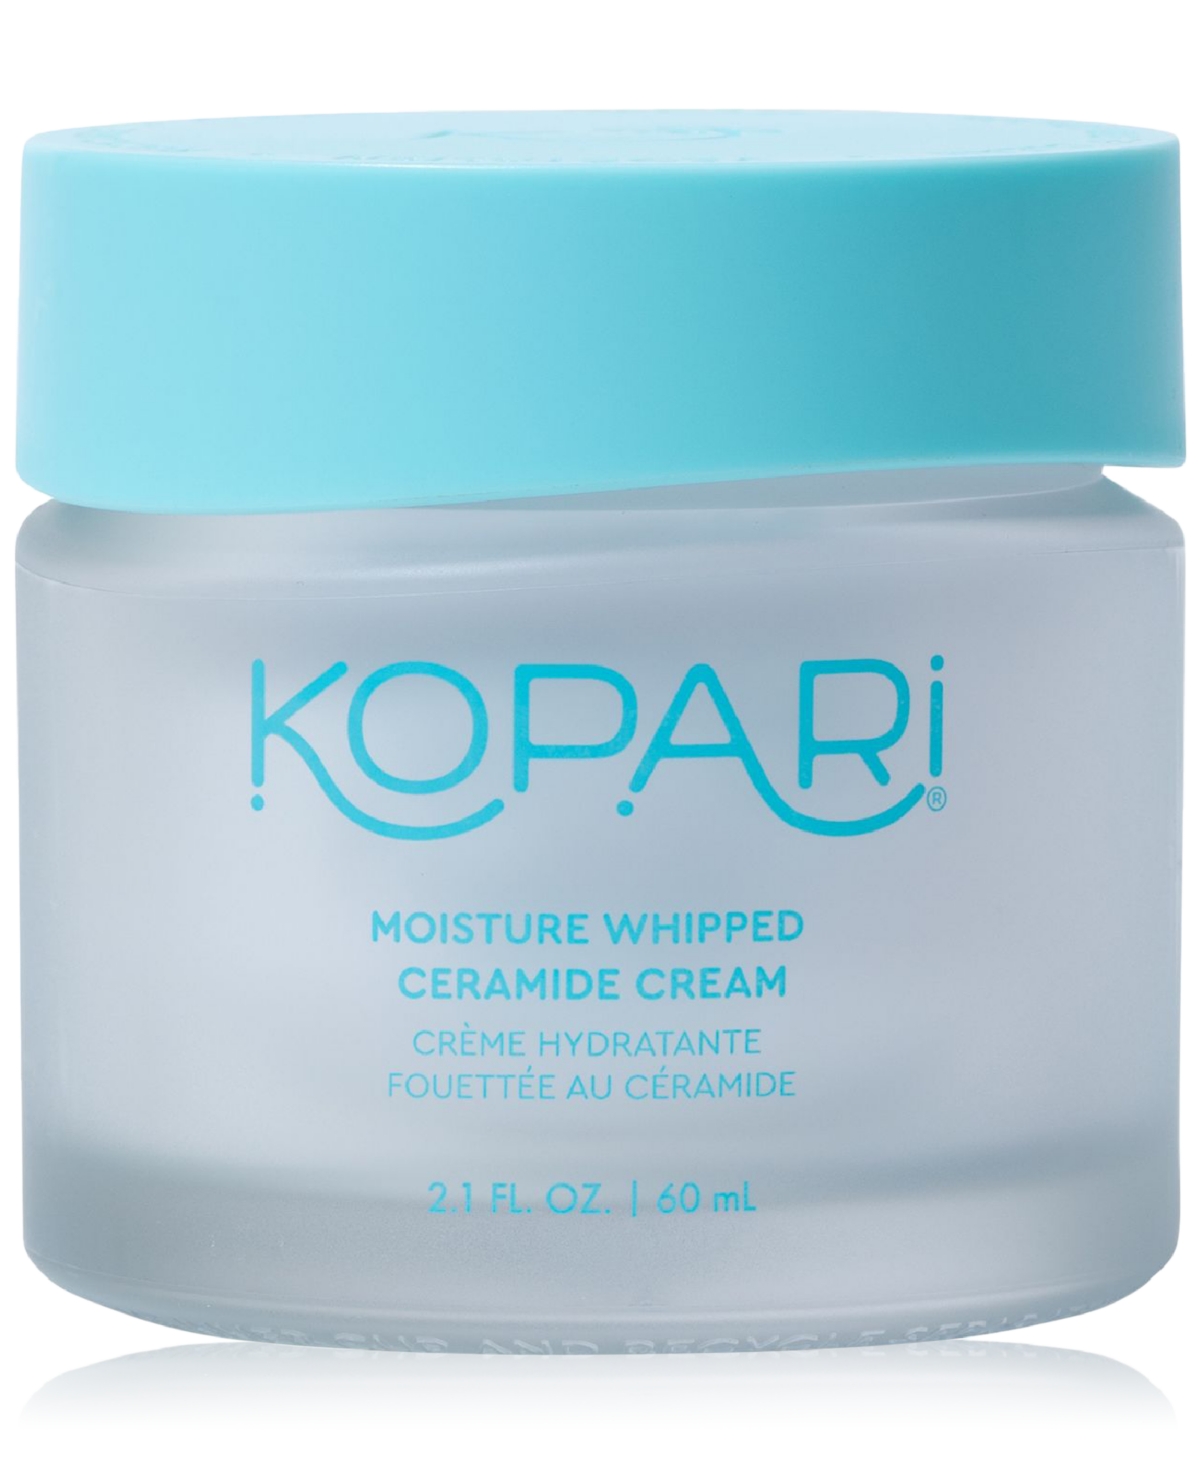 Kopari Beauty Moisture Whipped Ceramide Cream, 2.1 Oz.